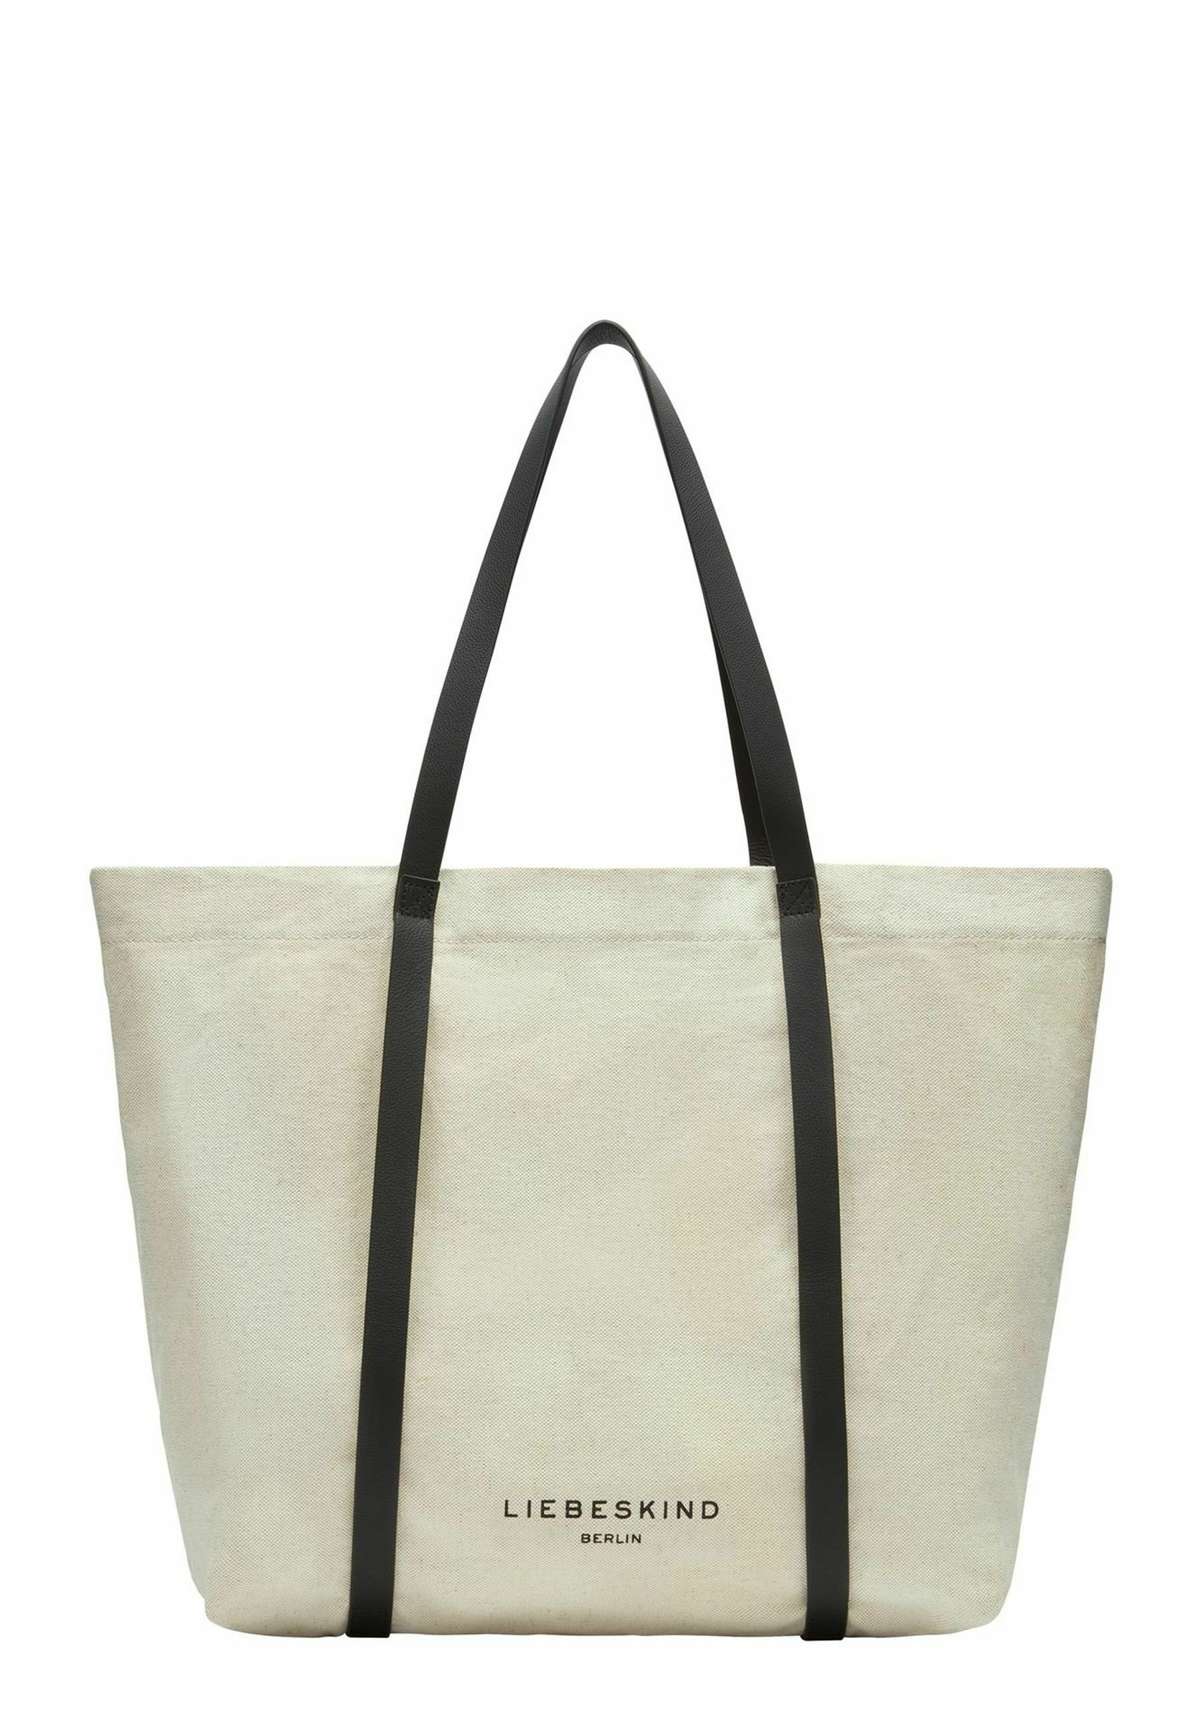 AURORA SHOPPER - Shopping Bag AURORA SHOPPER